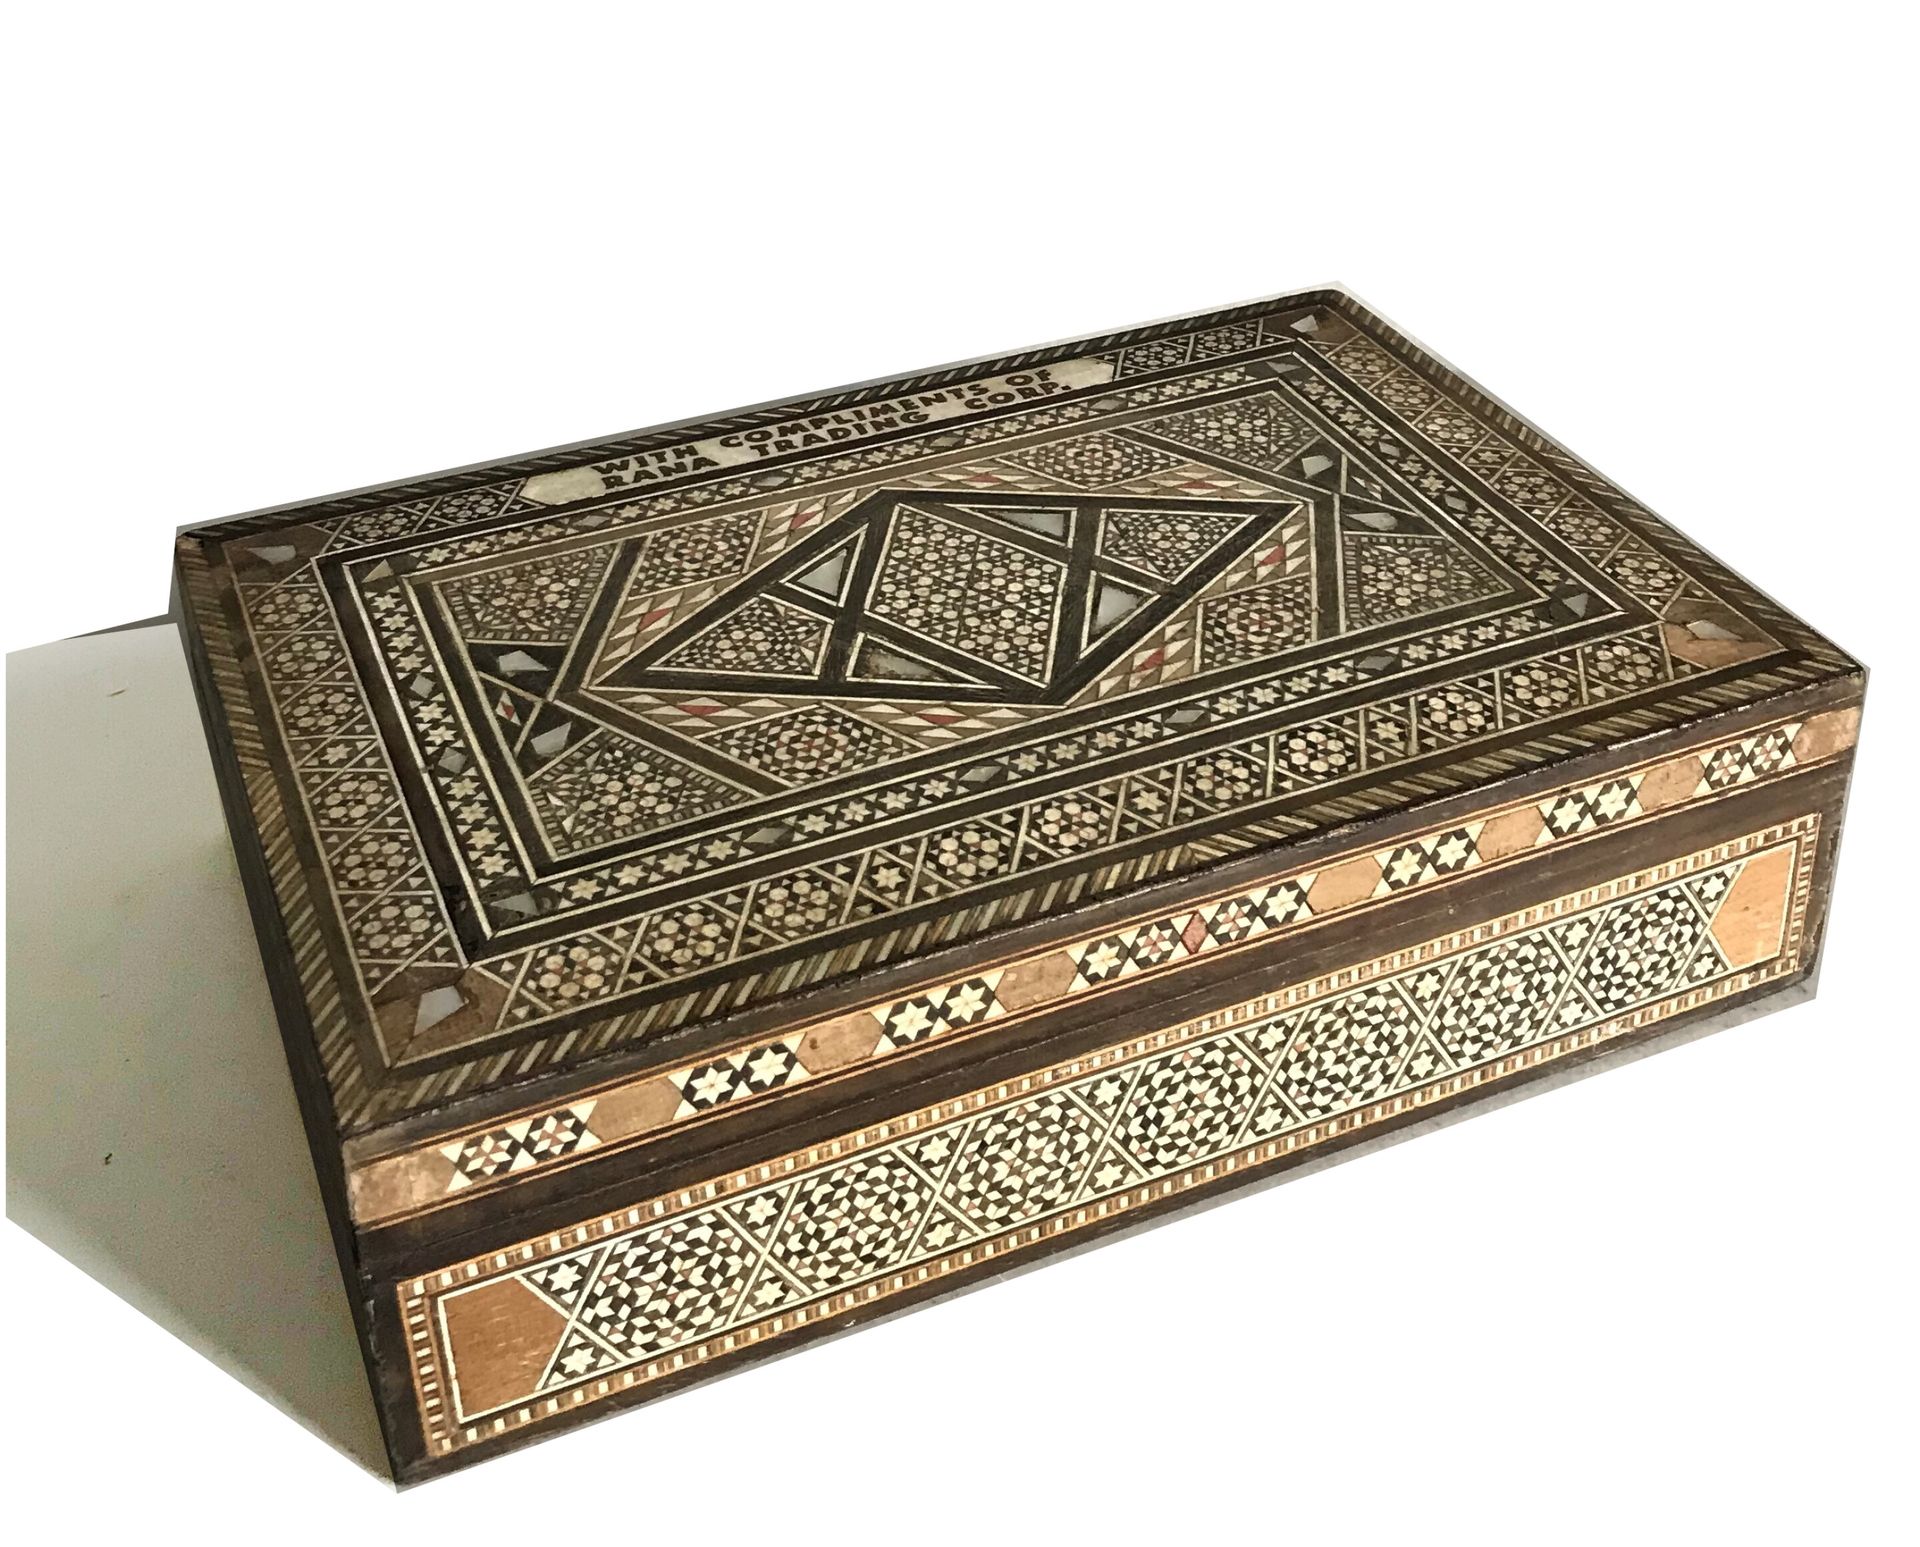 Null 长方形单板箱，装饰有各种木质、骨质和珍珠母的镶嵌物。盖子上有 "拉纳贸易公司致意 "的字样。

叙利亚风格的工作

H.8 - 宽29 - 深19厘米